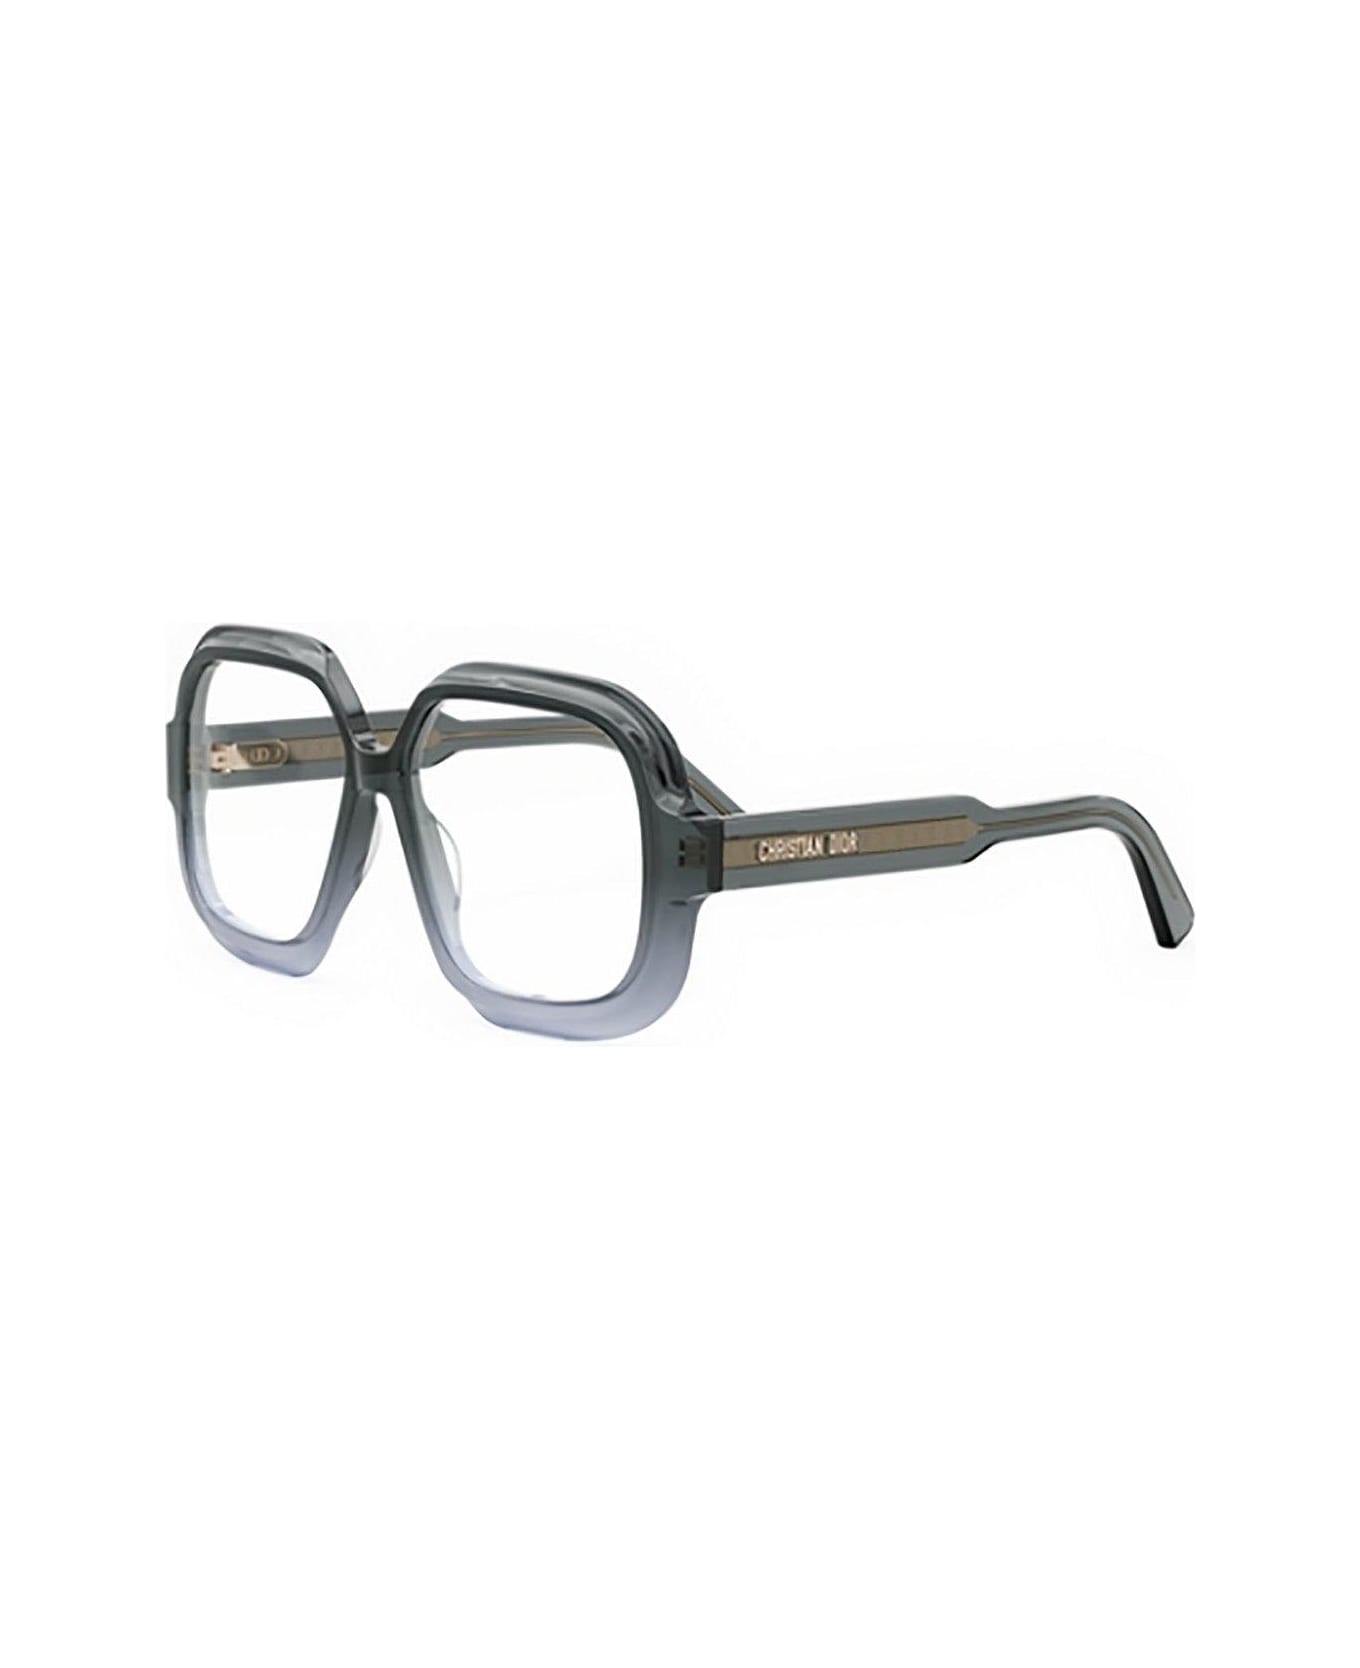 Dior Eyewear Square Frame Glasses - 4900